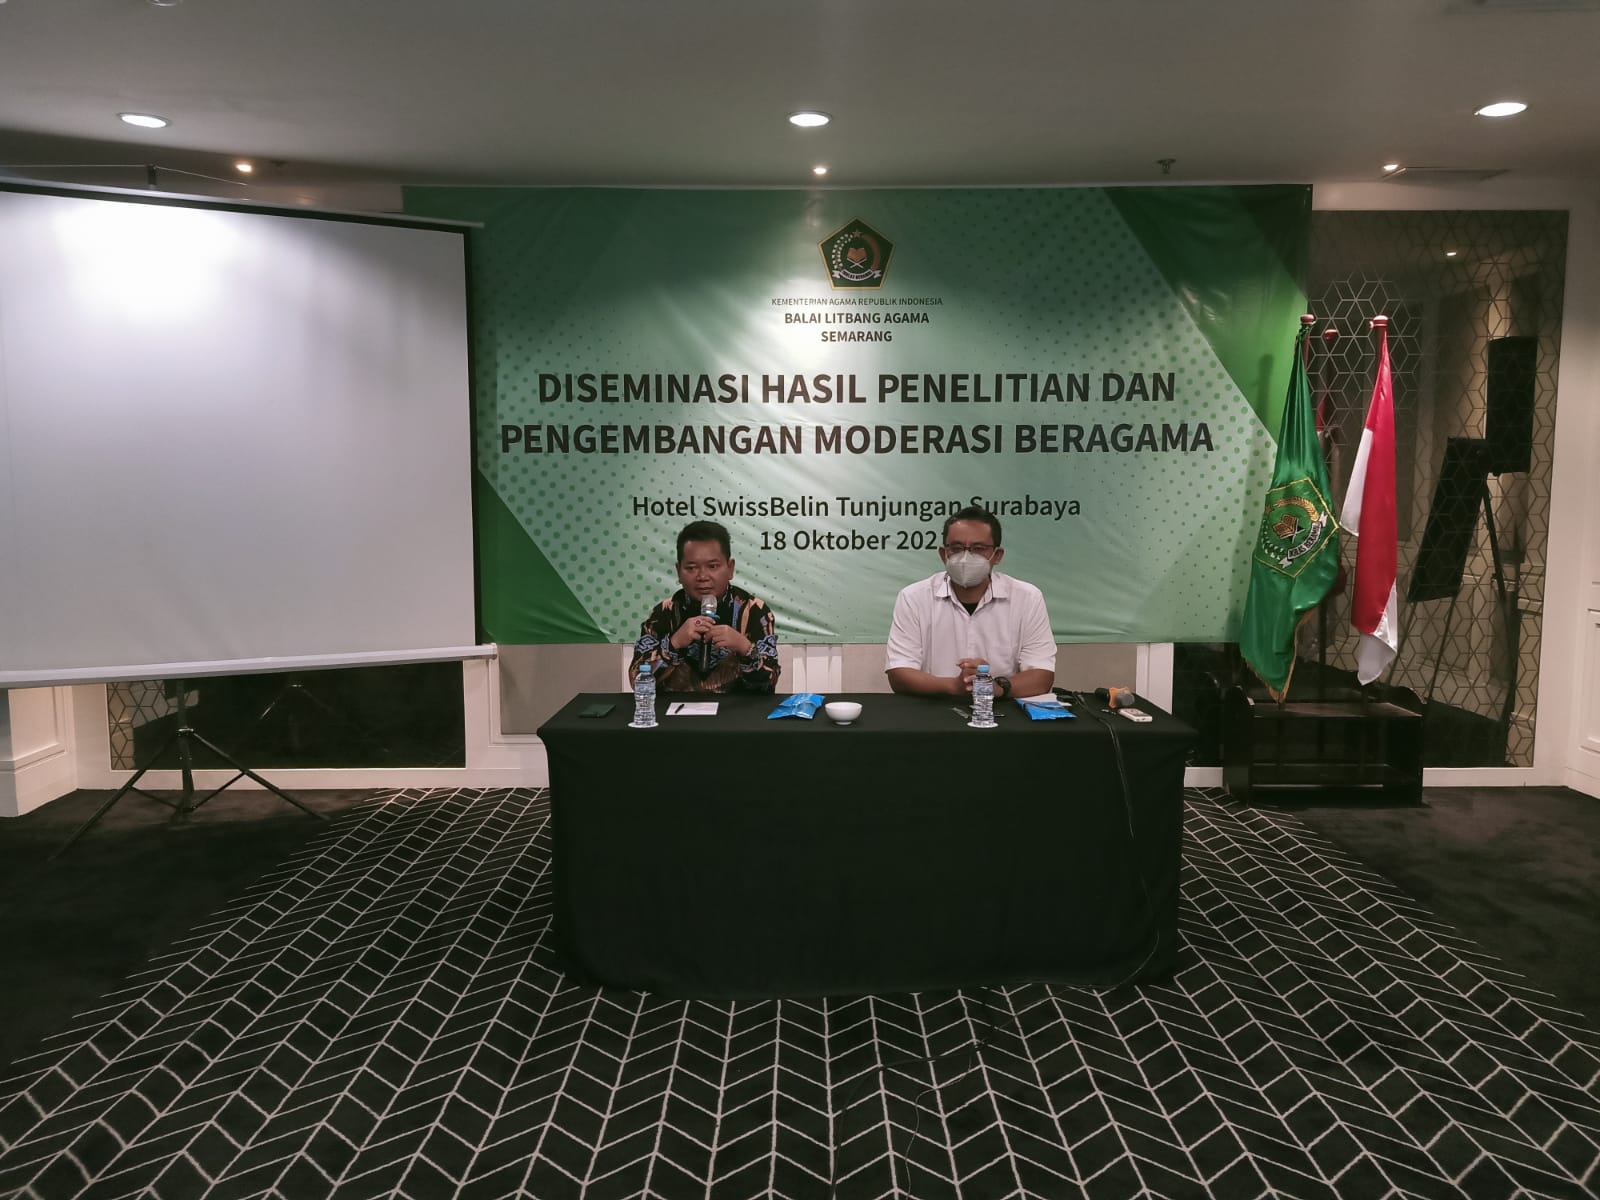 BLA Semarang Diseminasikan Hasil Kelitbangan Moderasi Beragama